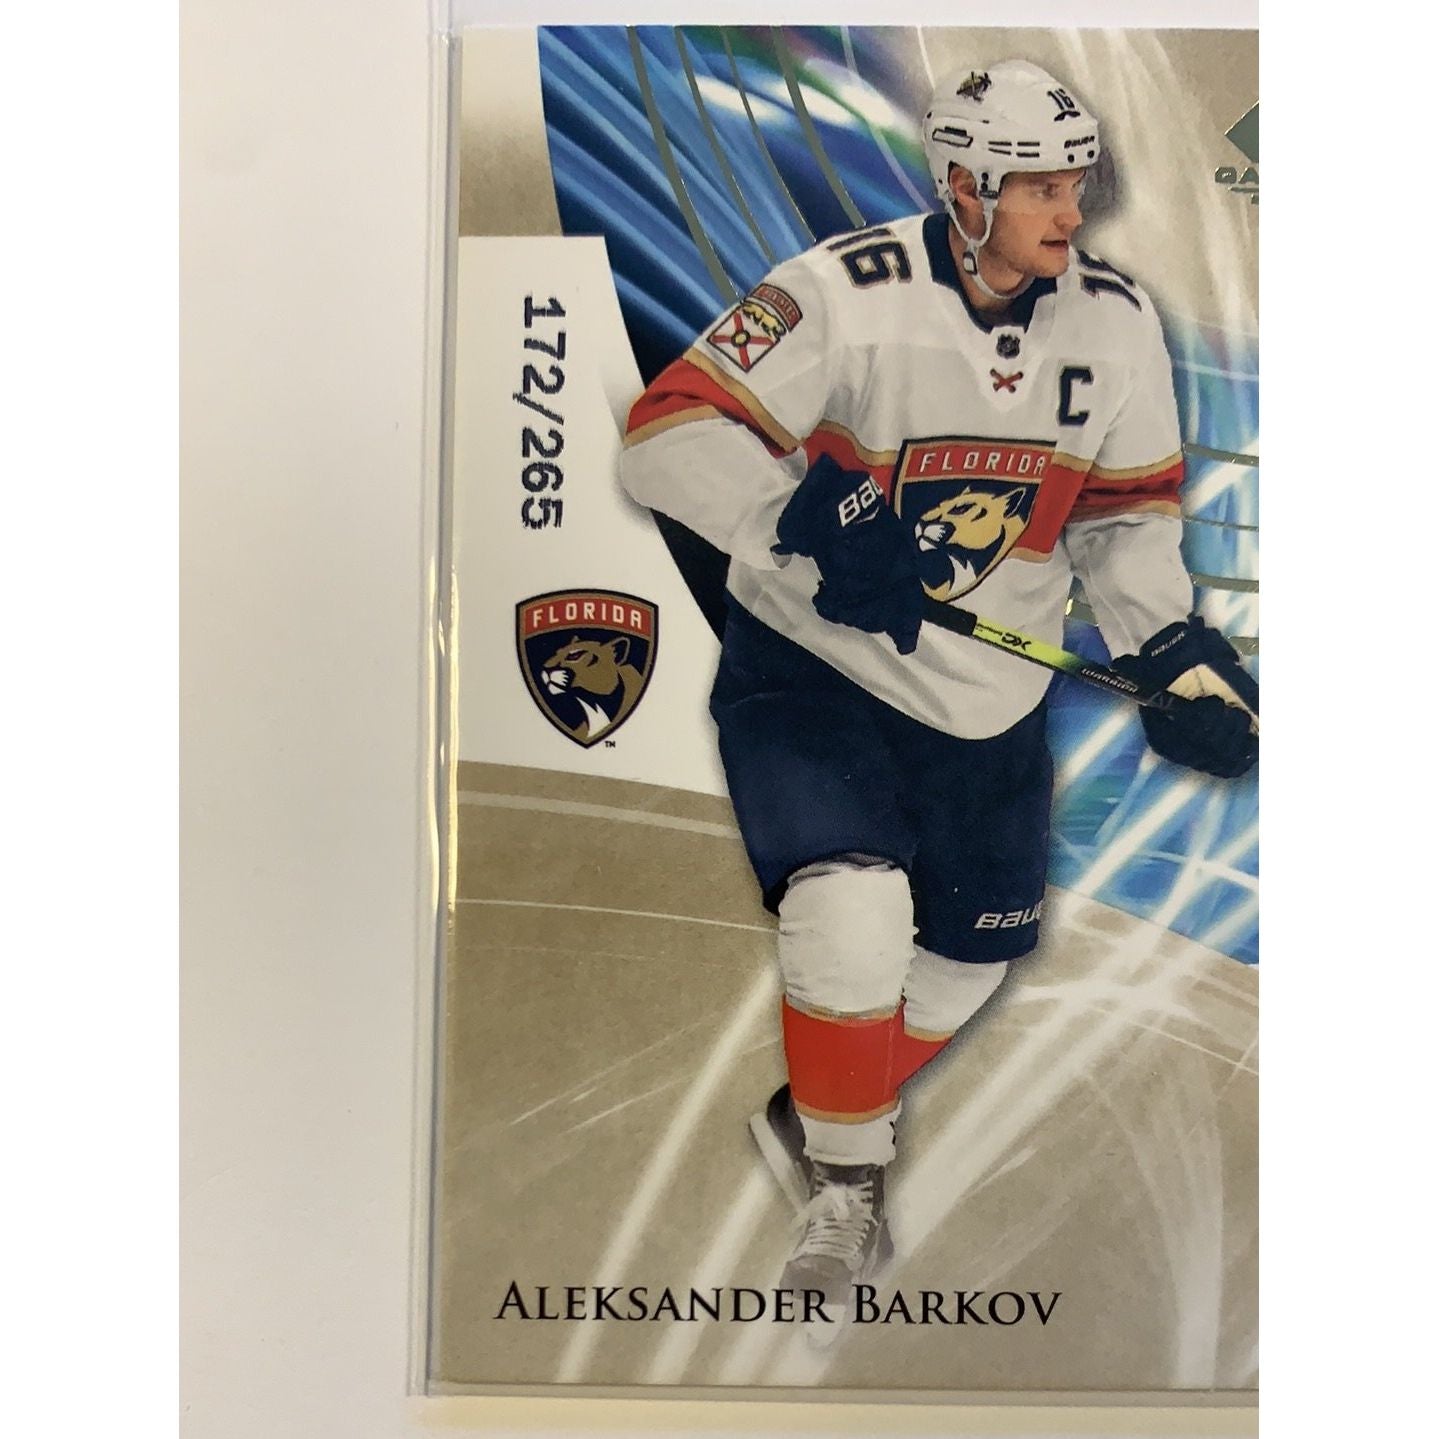  2020-21 SP Game Used Edition Aleksander Barkov /265  Local Legends Cards & Collectibles